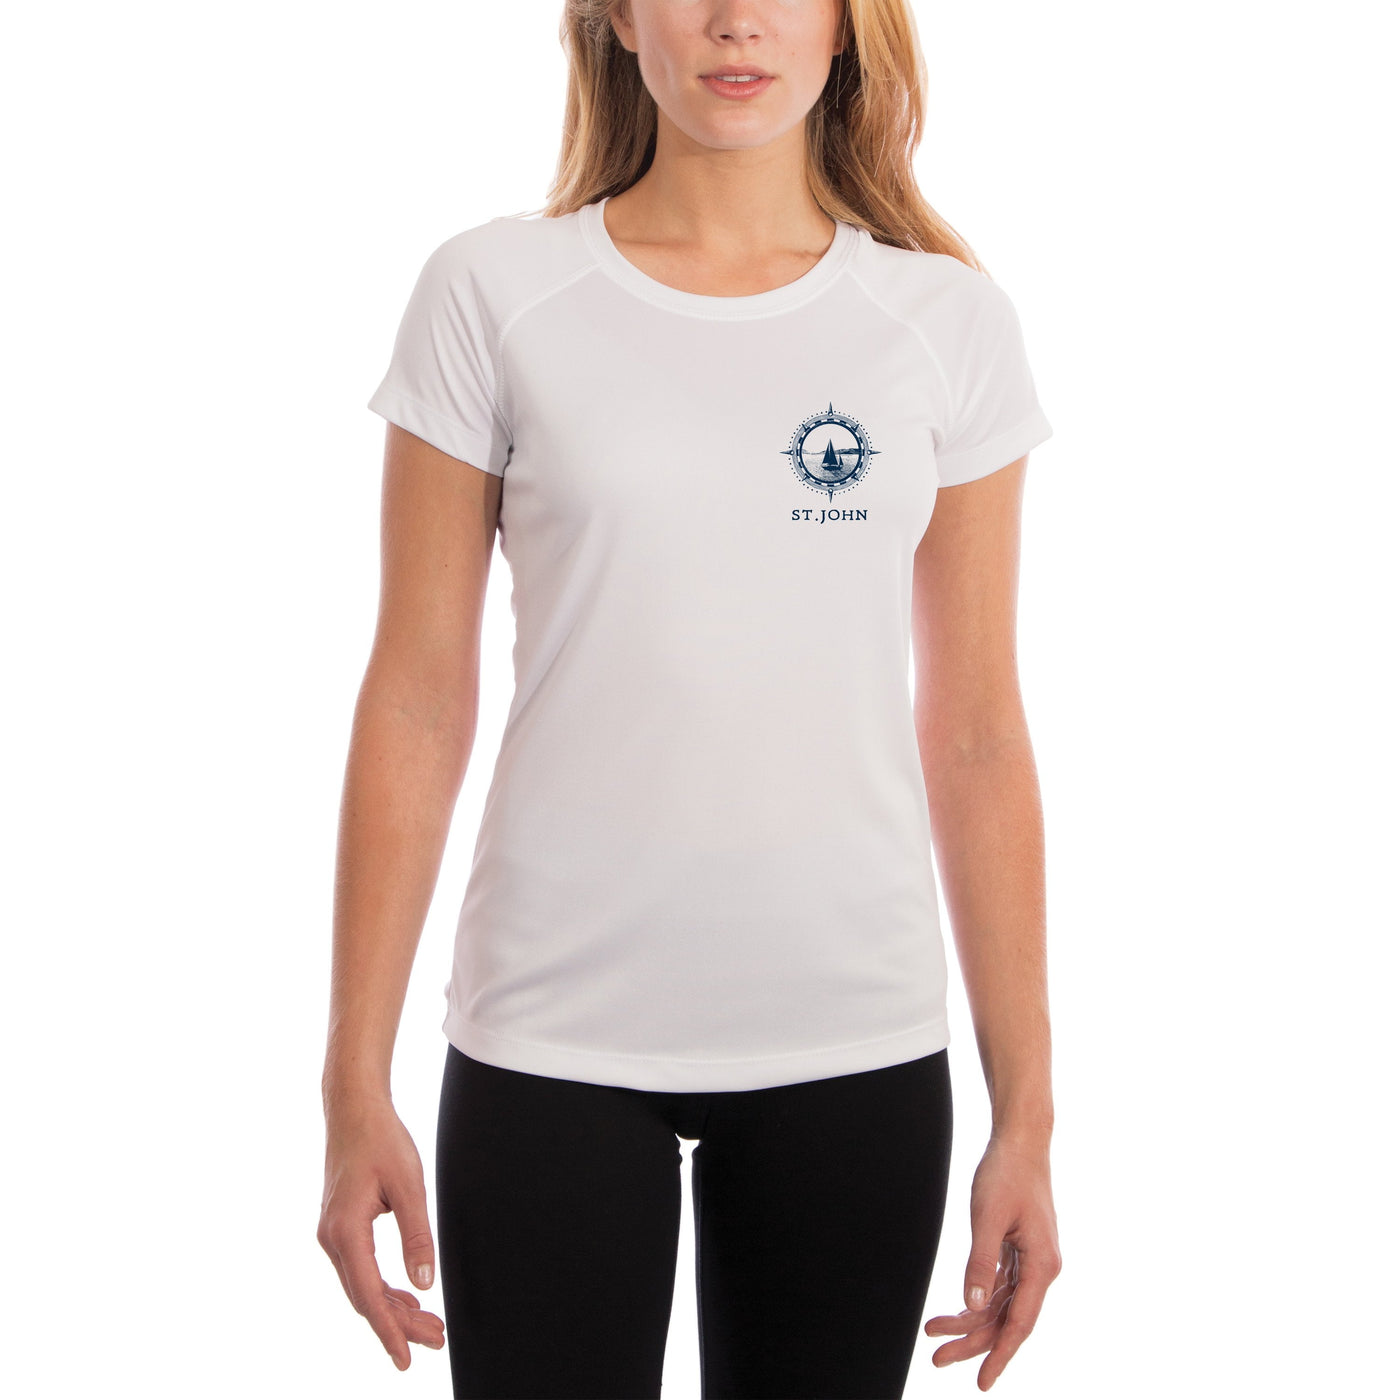 Compass Vintage St.John Women's UPF 50+ Classic Fit Short Sleeve T-shirt